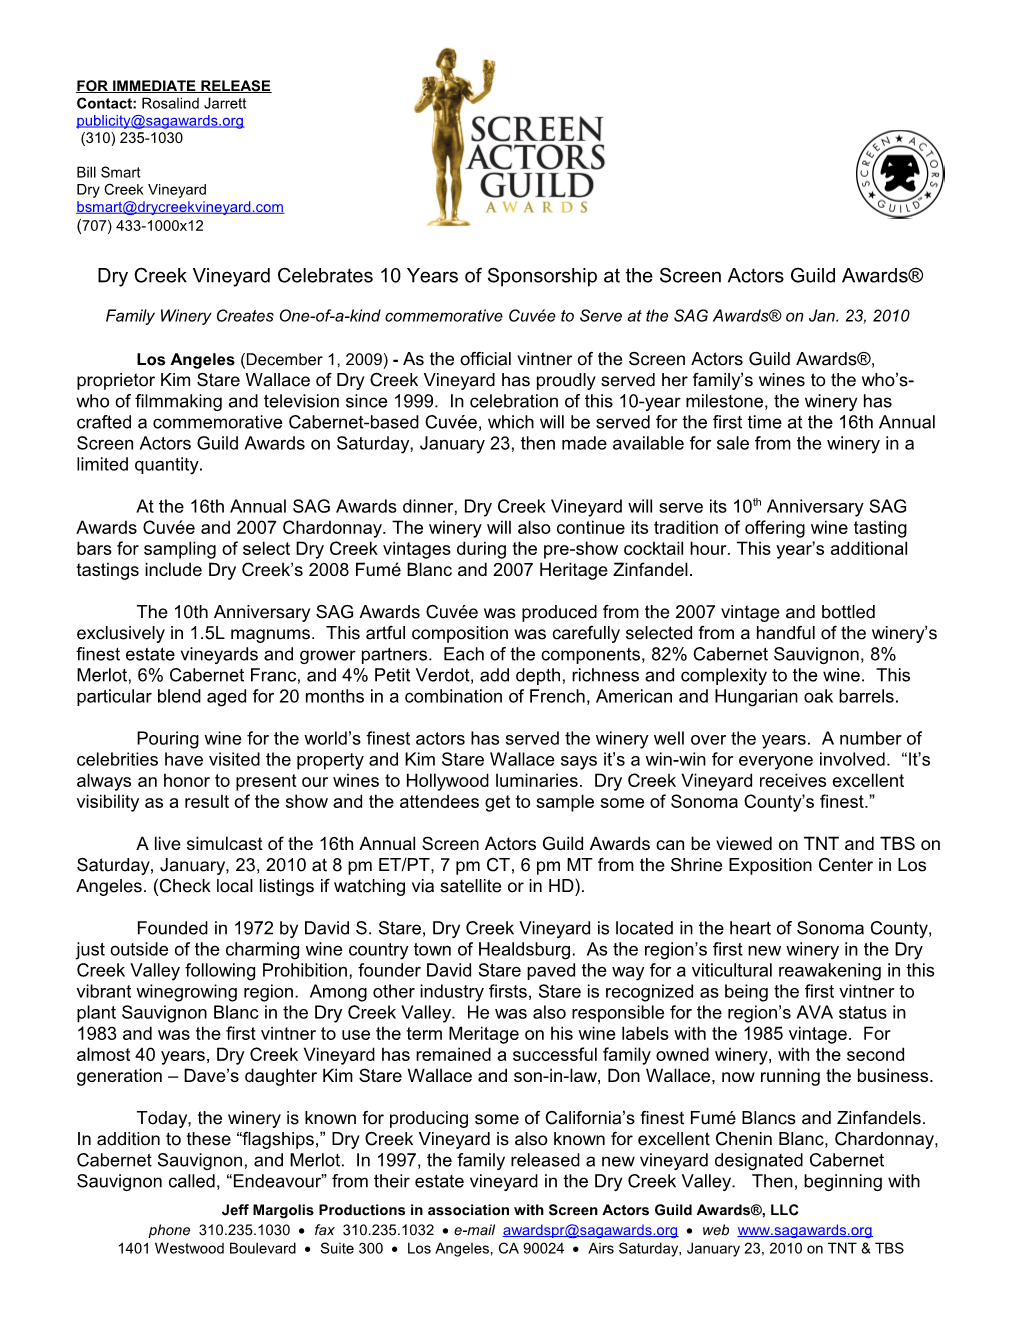 Dry Creek Vineyard Celebrates 10 Years of Sponsorship at the Screen Actors Guild Awards - 1